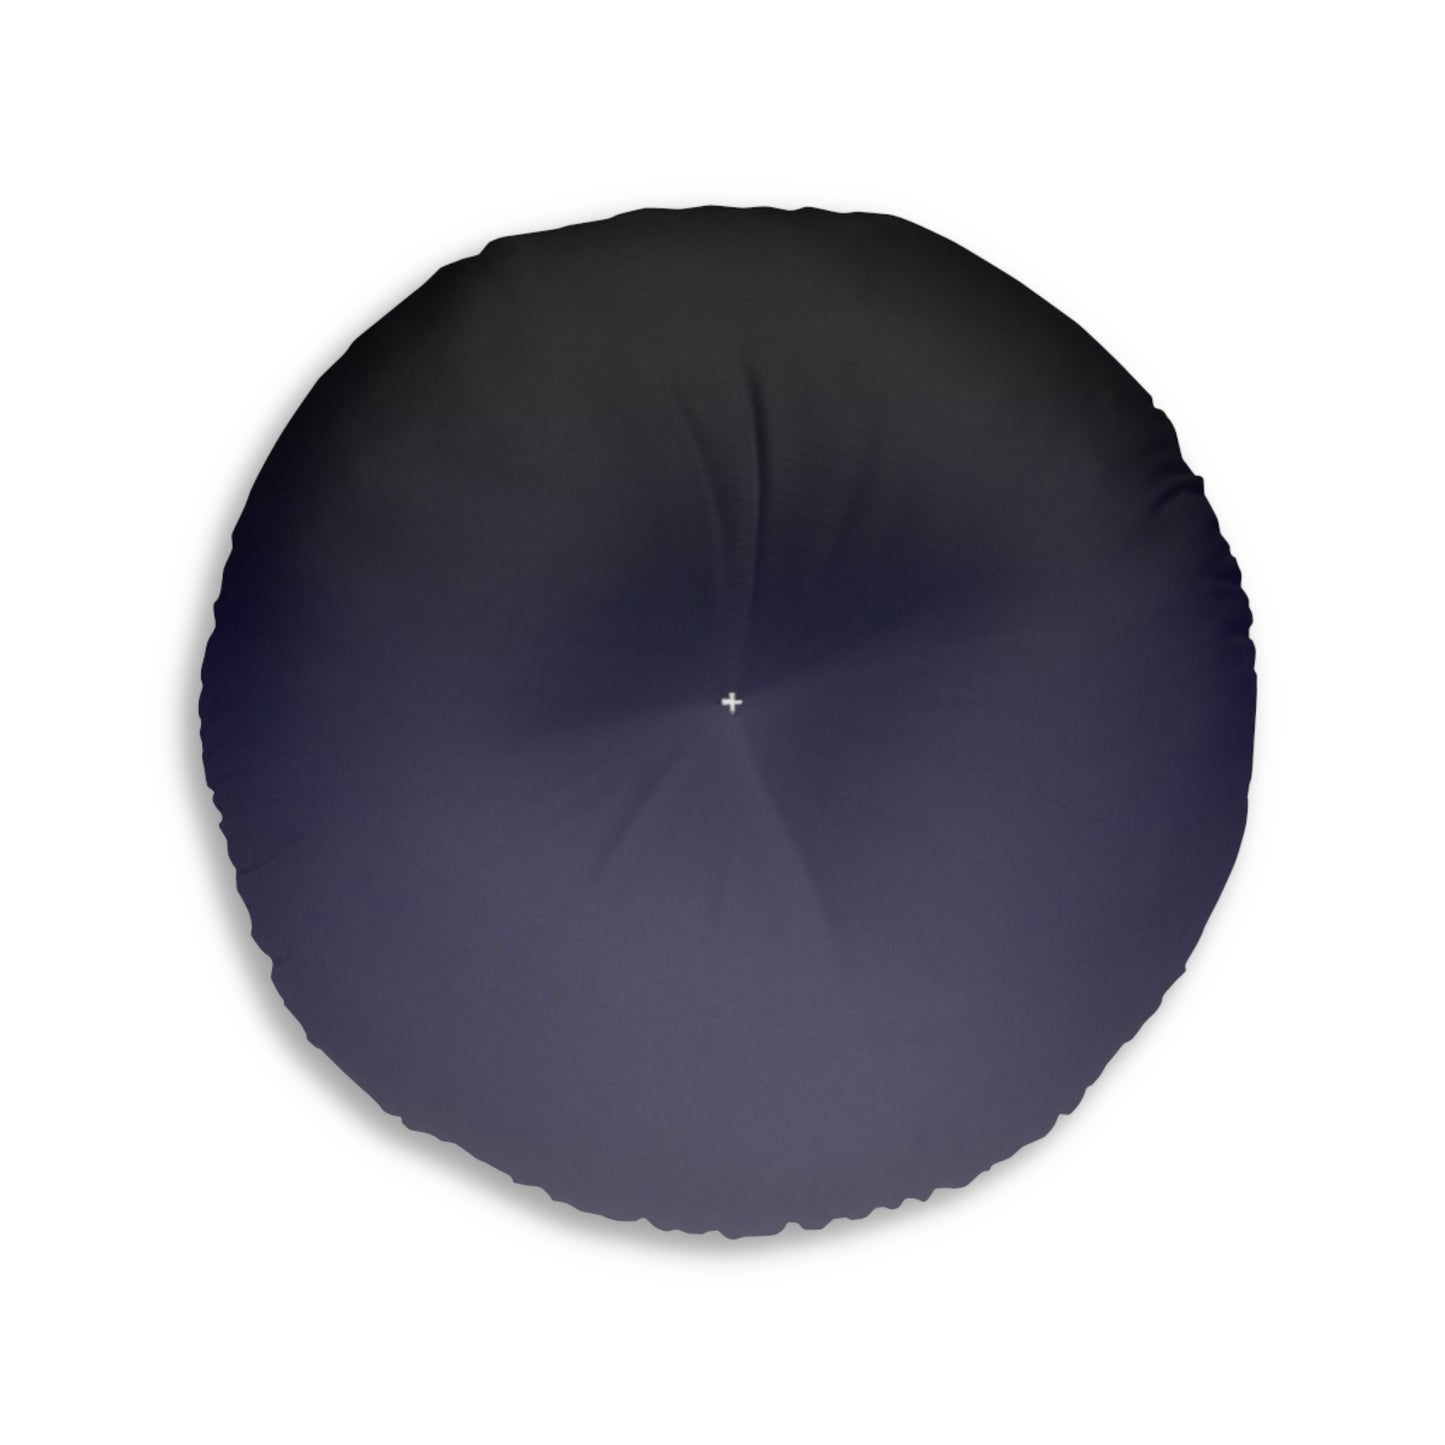 SCA LOGO Black | Tufted Floor Pillow, 2 sizes